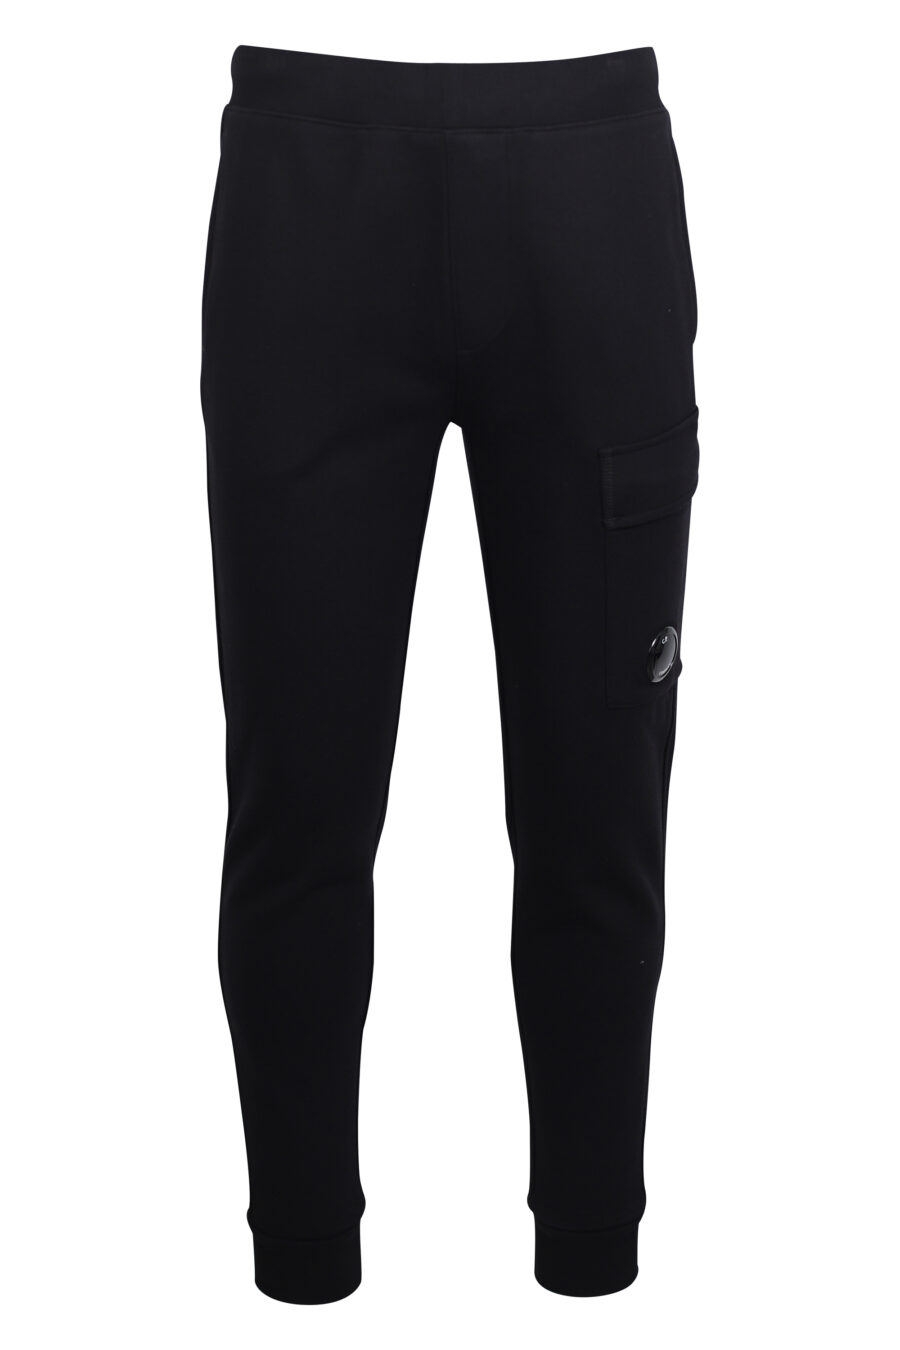 Pantalon cargo noir avec poches diagonales et mini-logo circulaire - IMG 2471